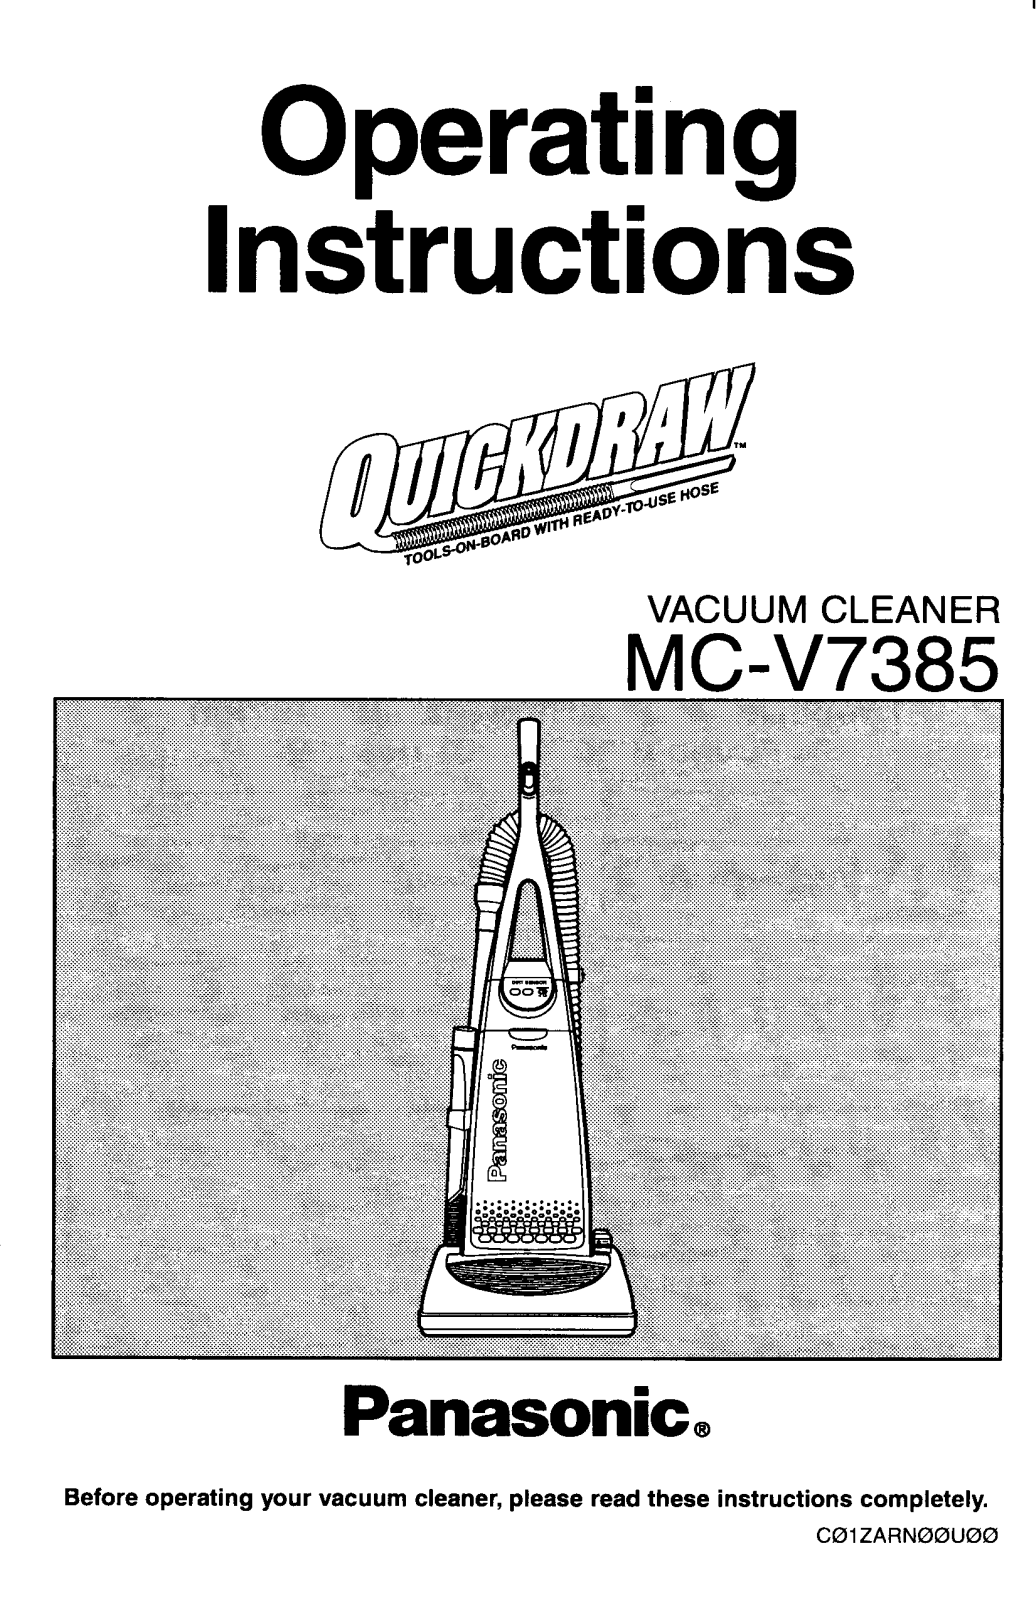 Panasonic mc-v7385 Operation Manual